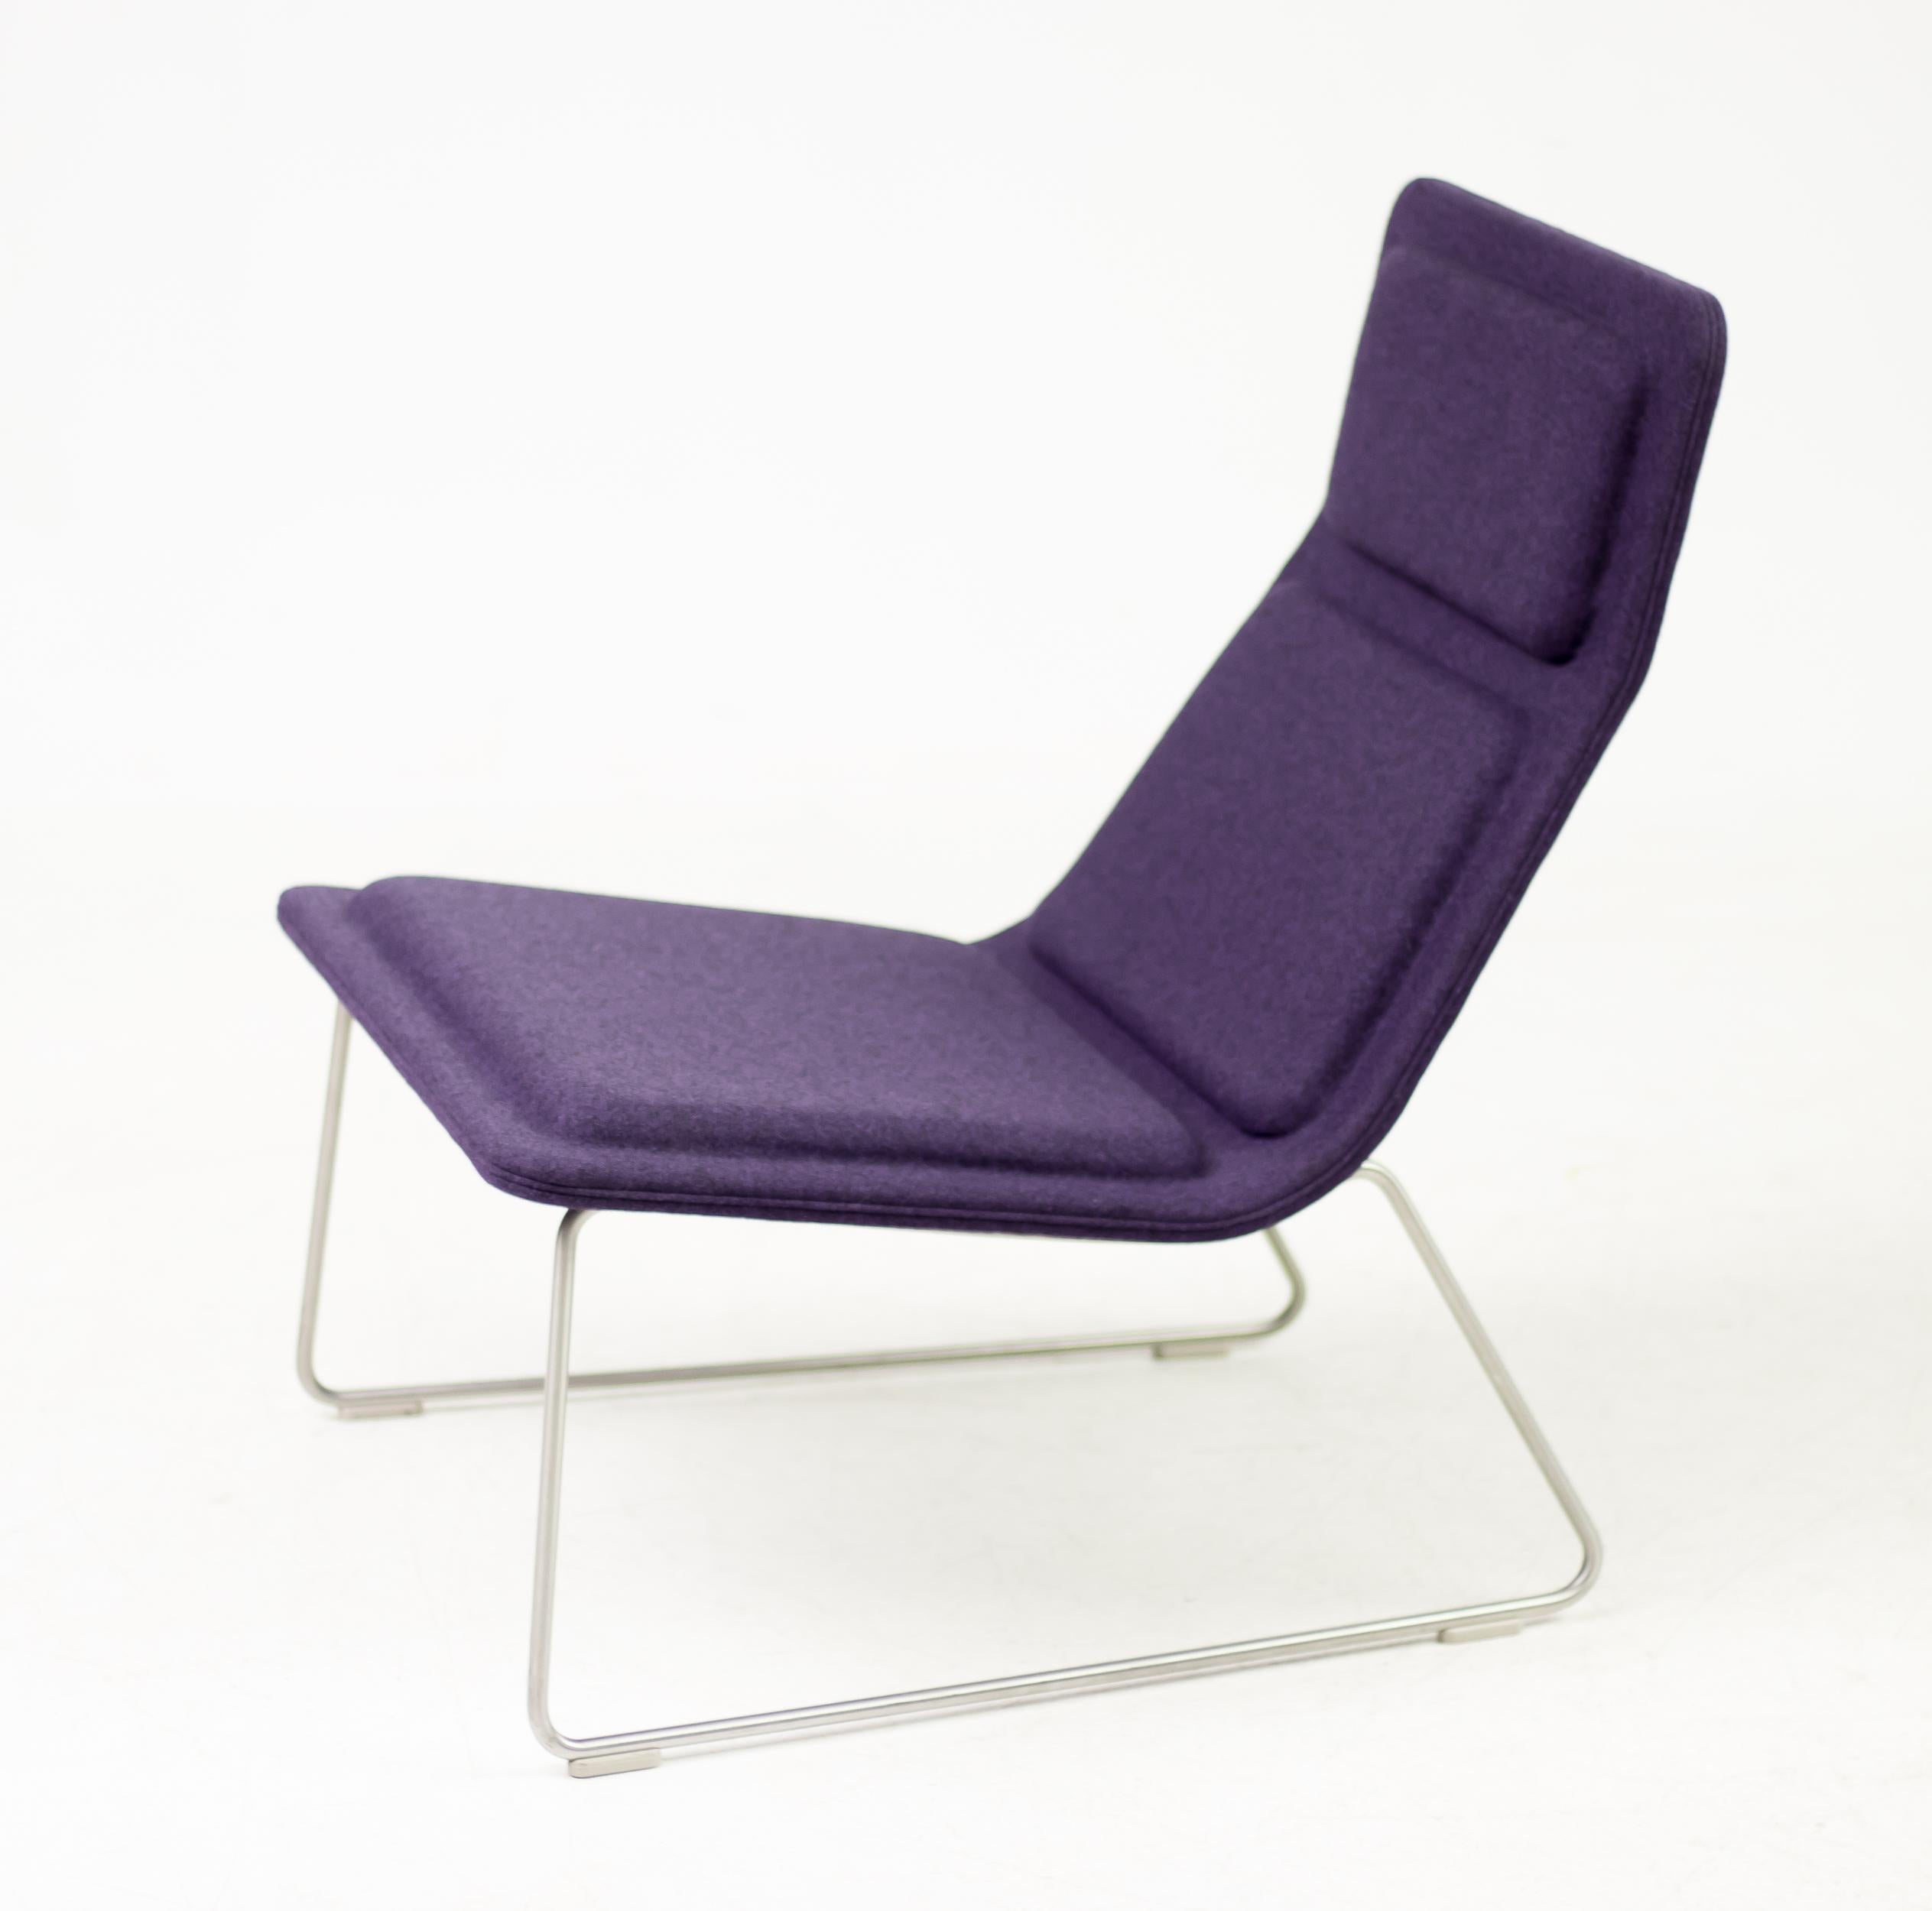 Modern Jasper Morrison Low Pad Lounge Chairs